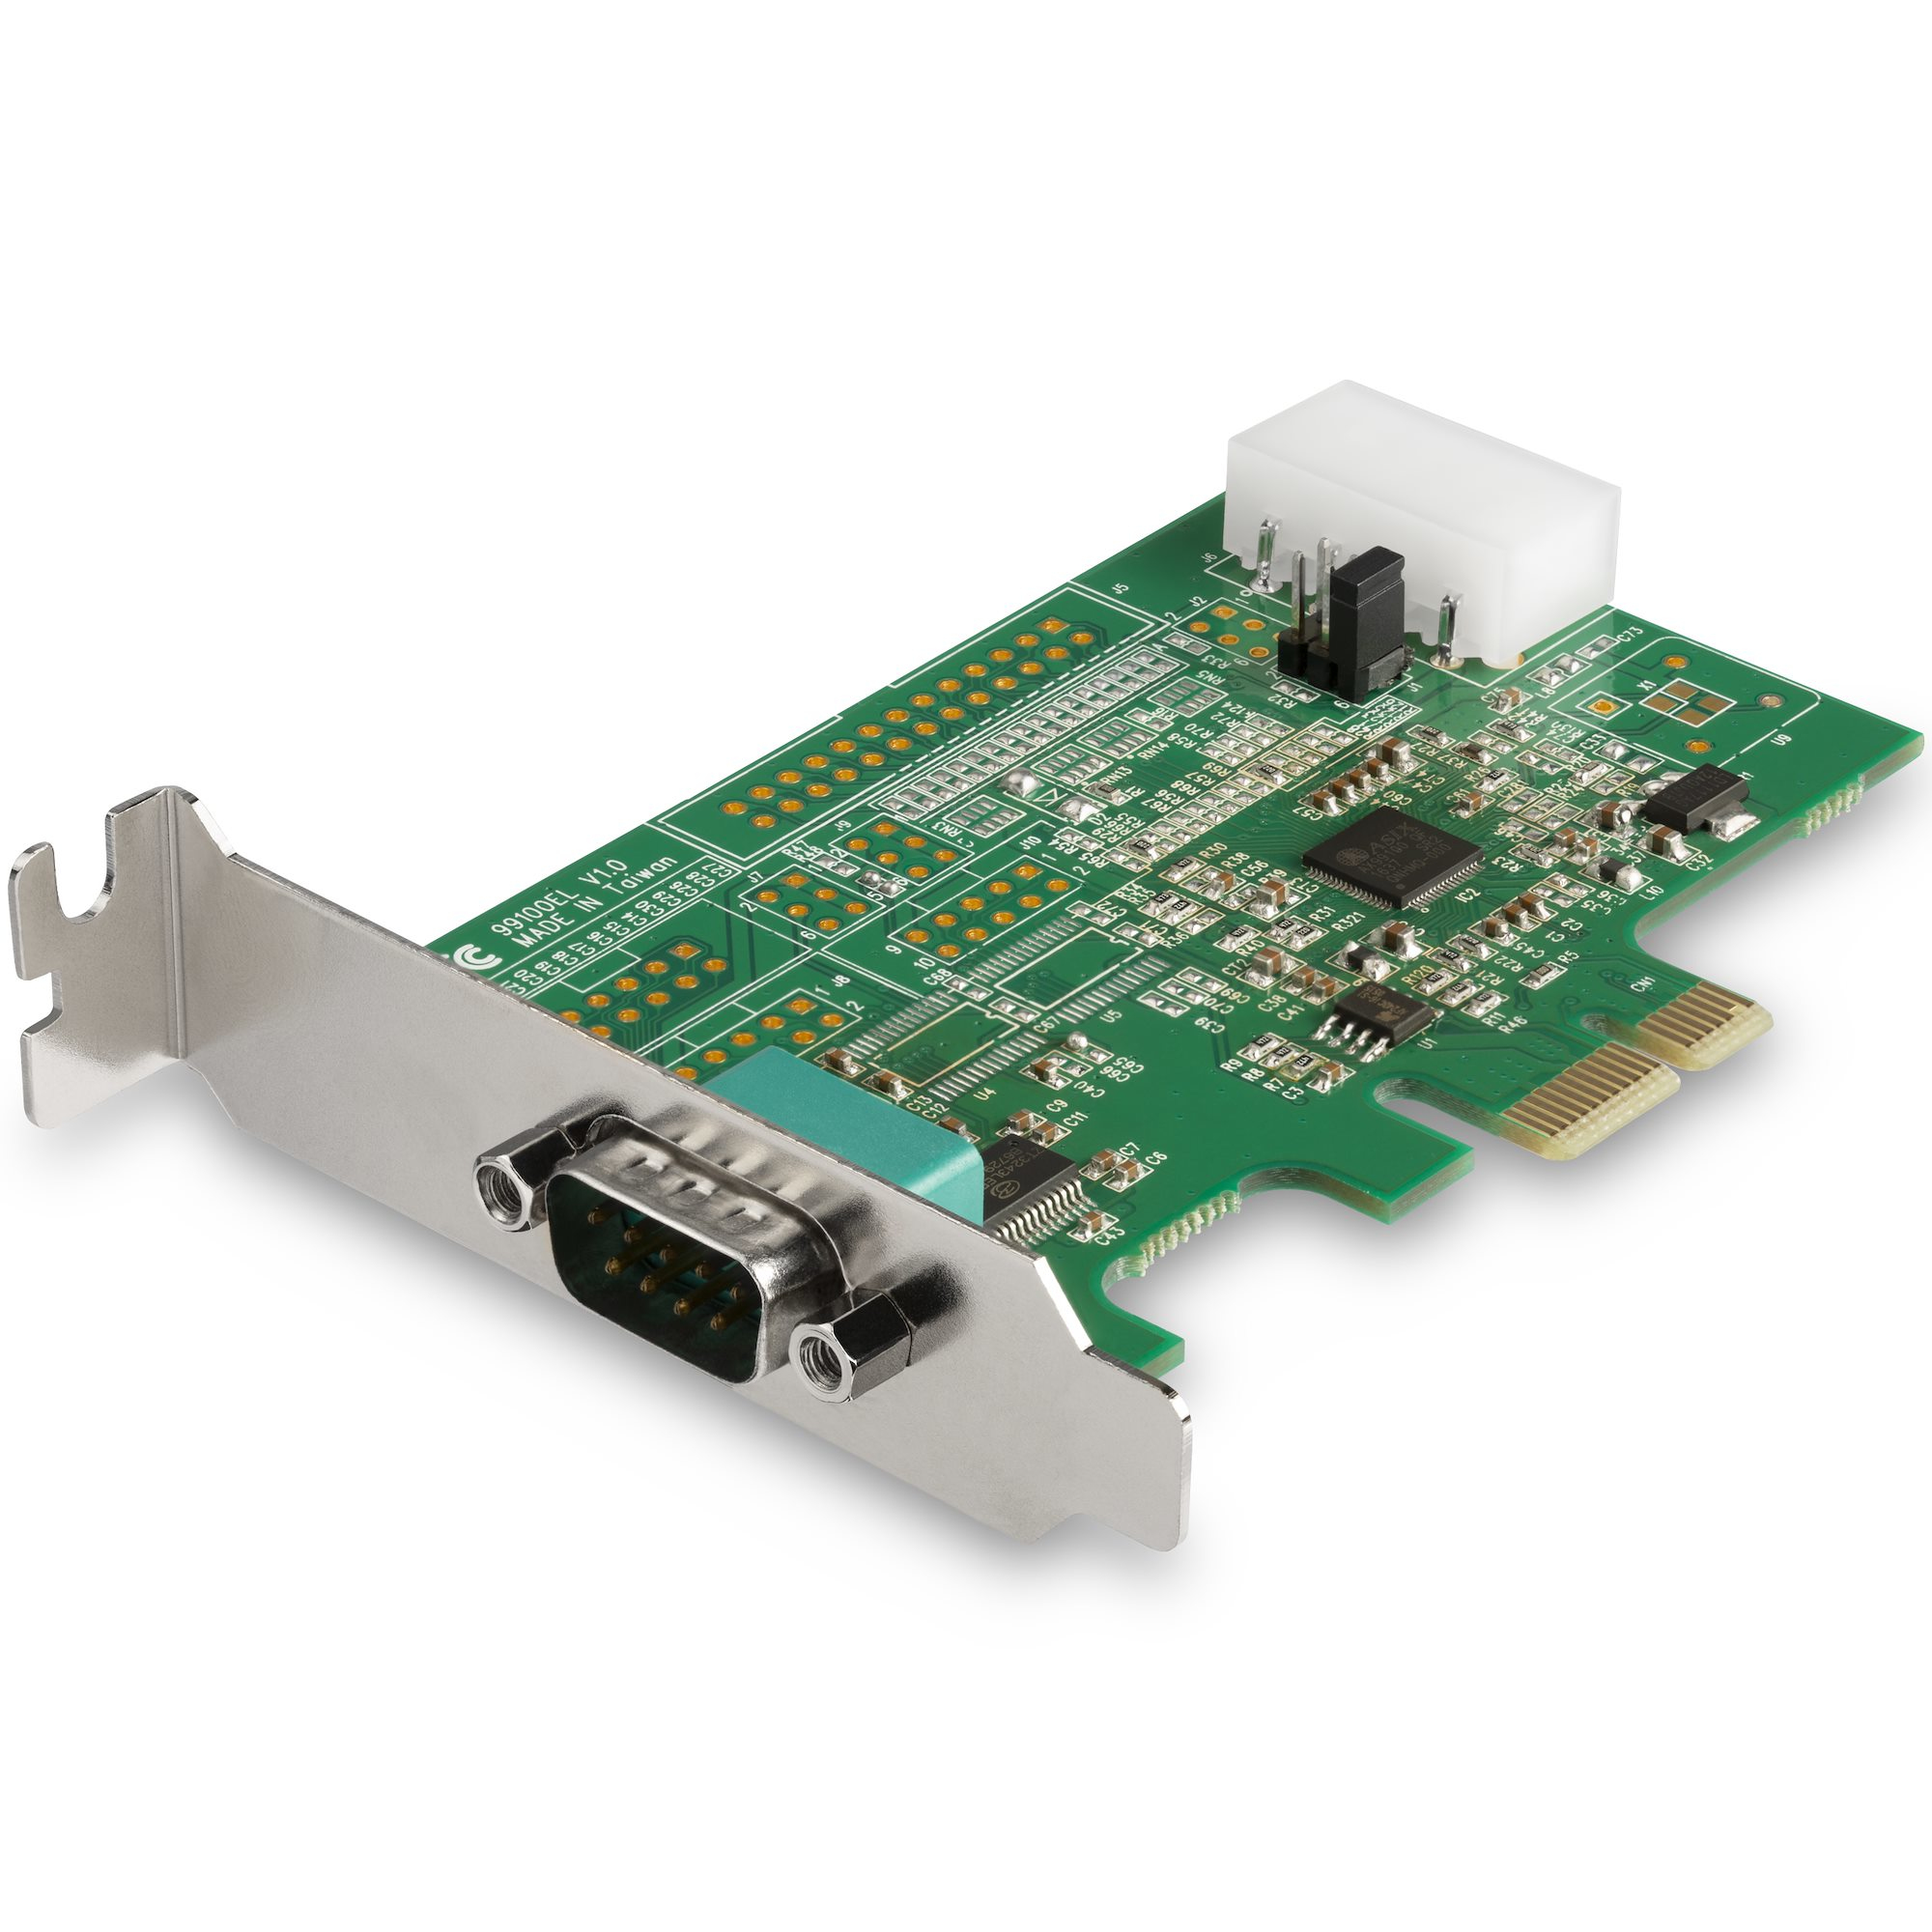 StarTech.com 4-port PCI Express RS232 Serial Adapter Card - PCIe RS232 Serial Host Controller Card - PCIe to Serial DB9 Card - 16950 UART - Expansion Card - Windows/Linux